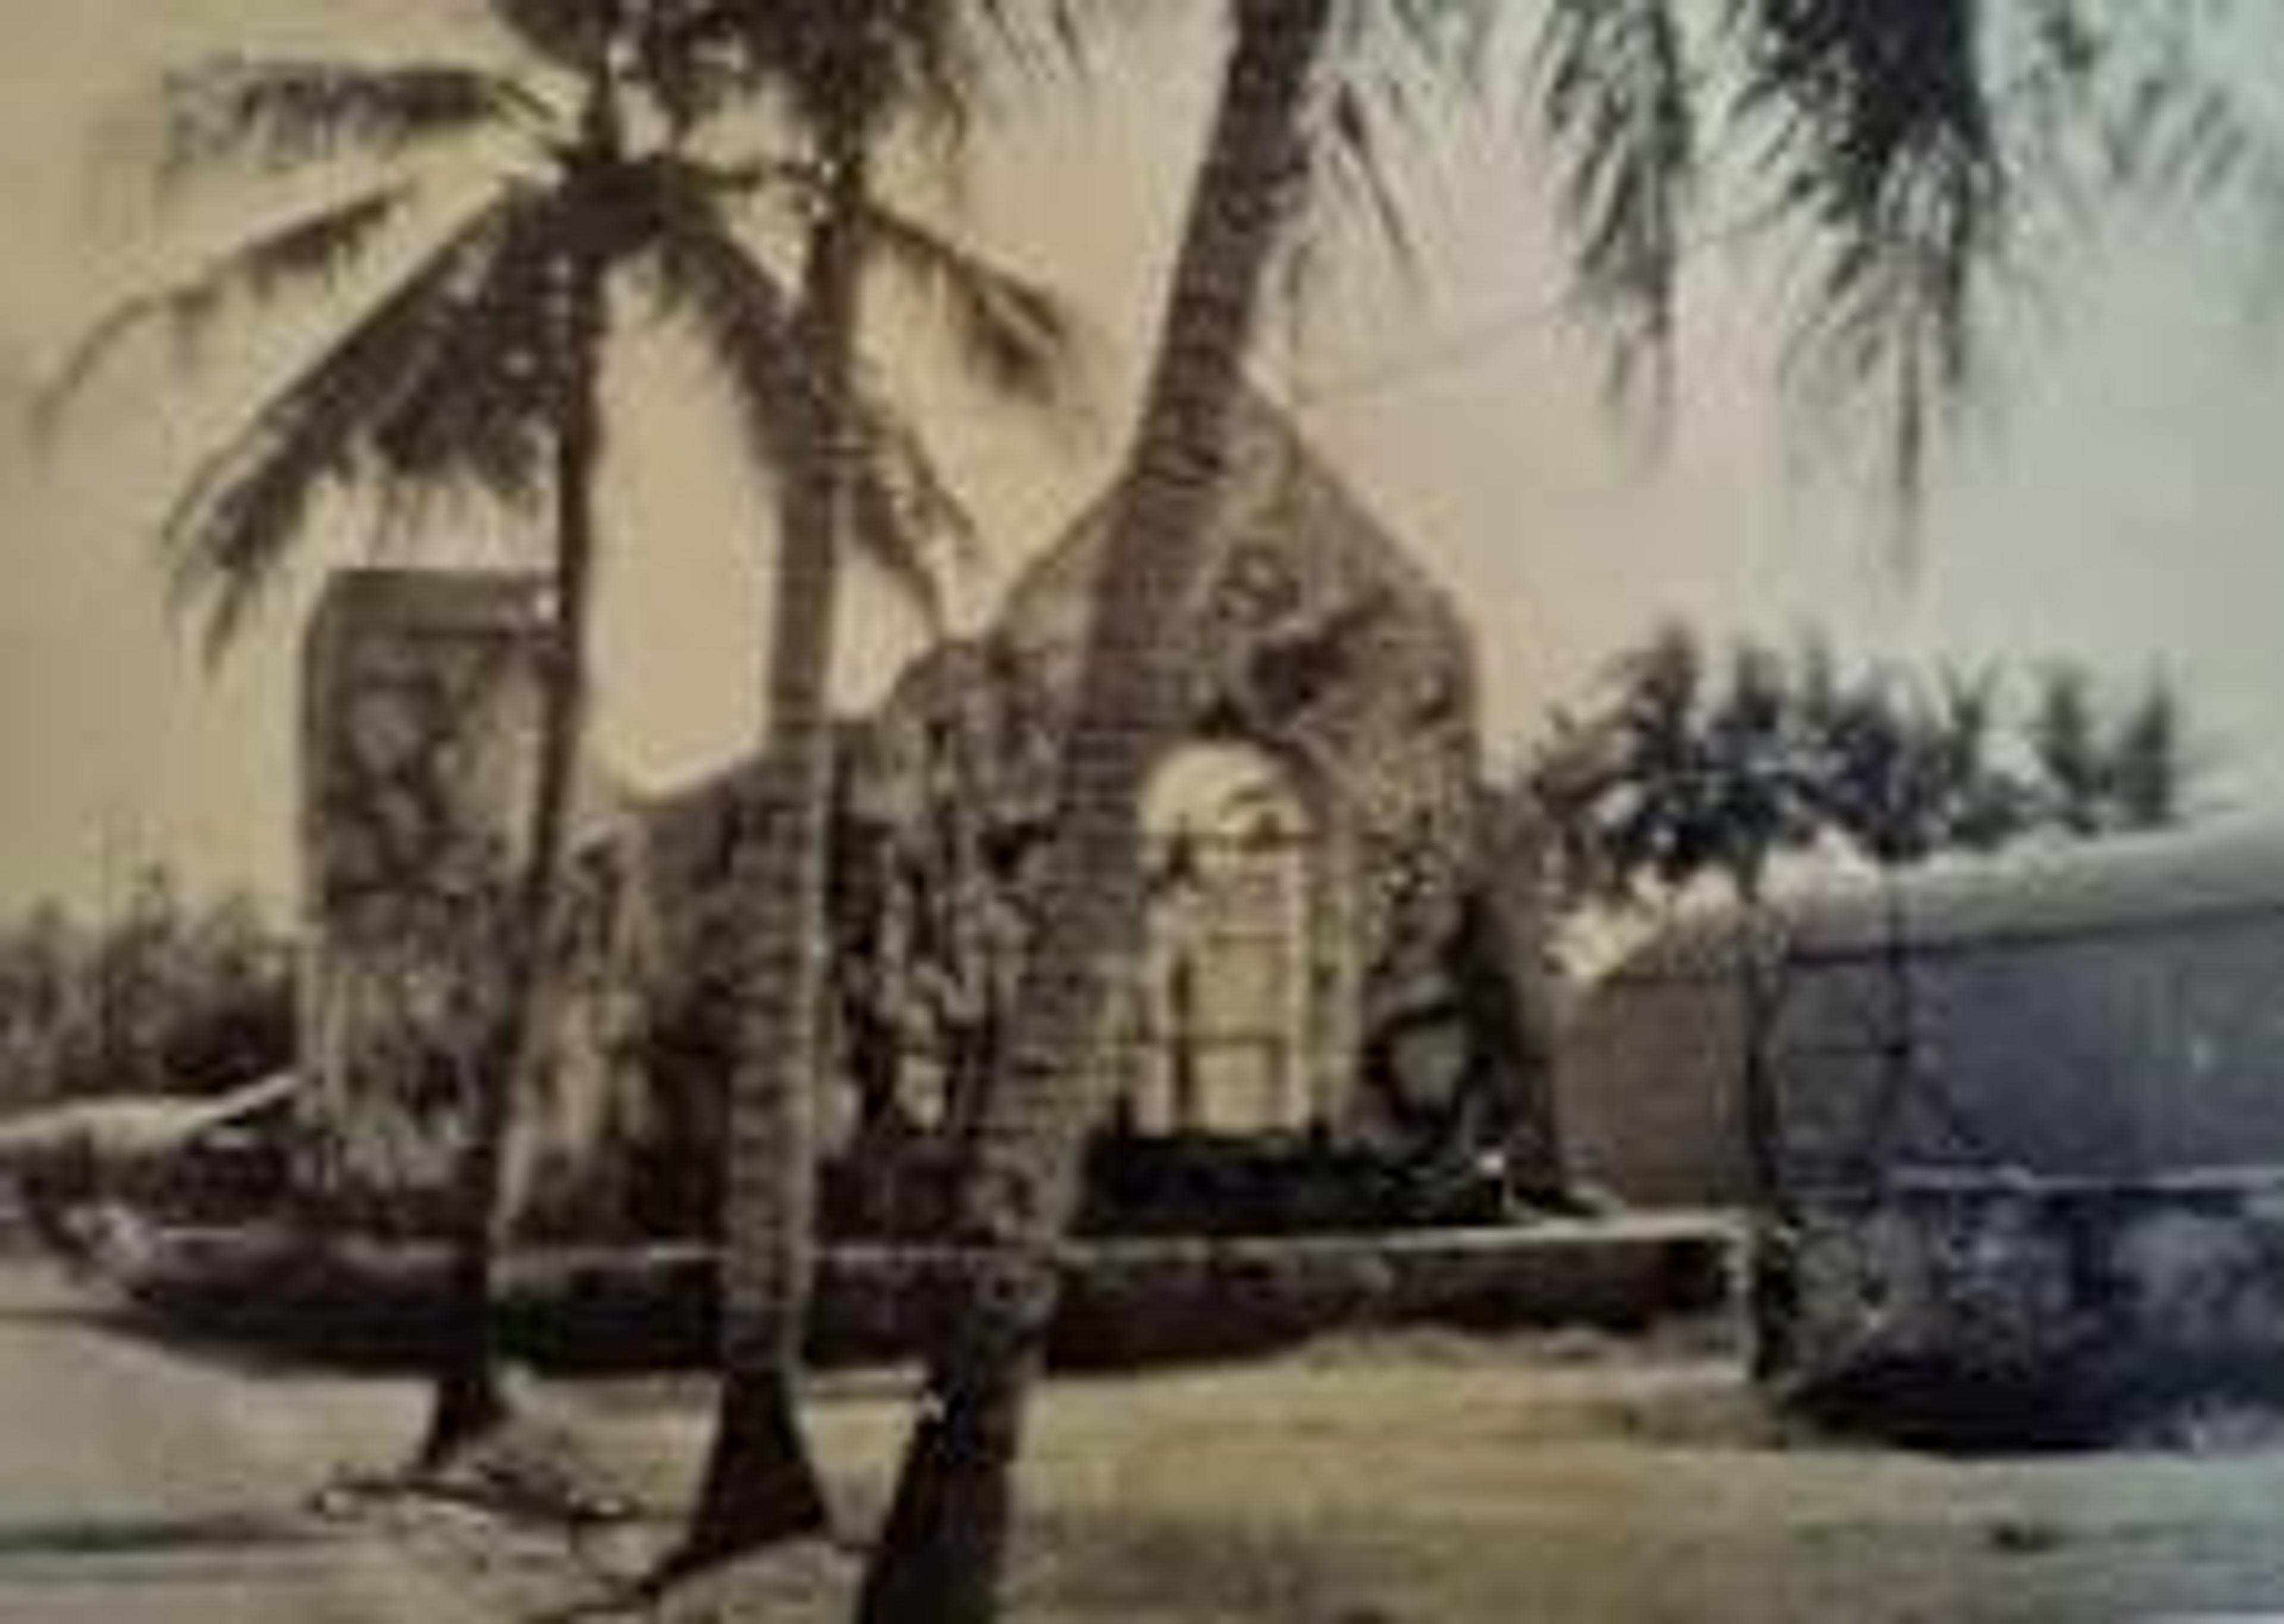 The bombed church on the Tuvaluan island of Funafuti. 